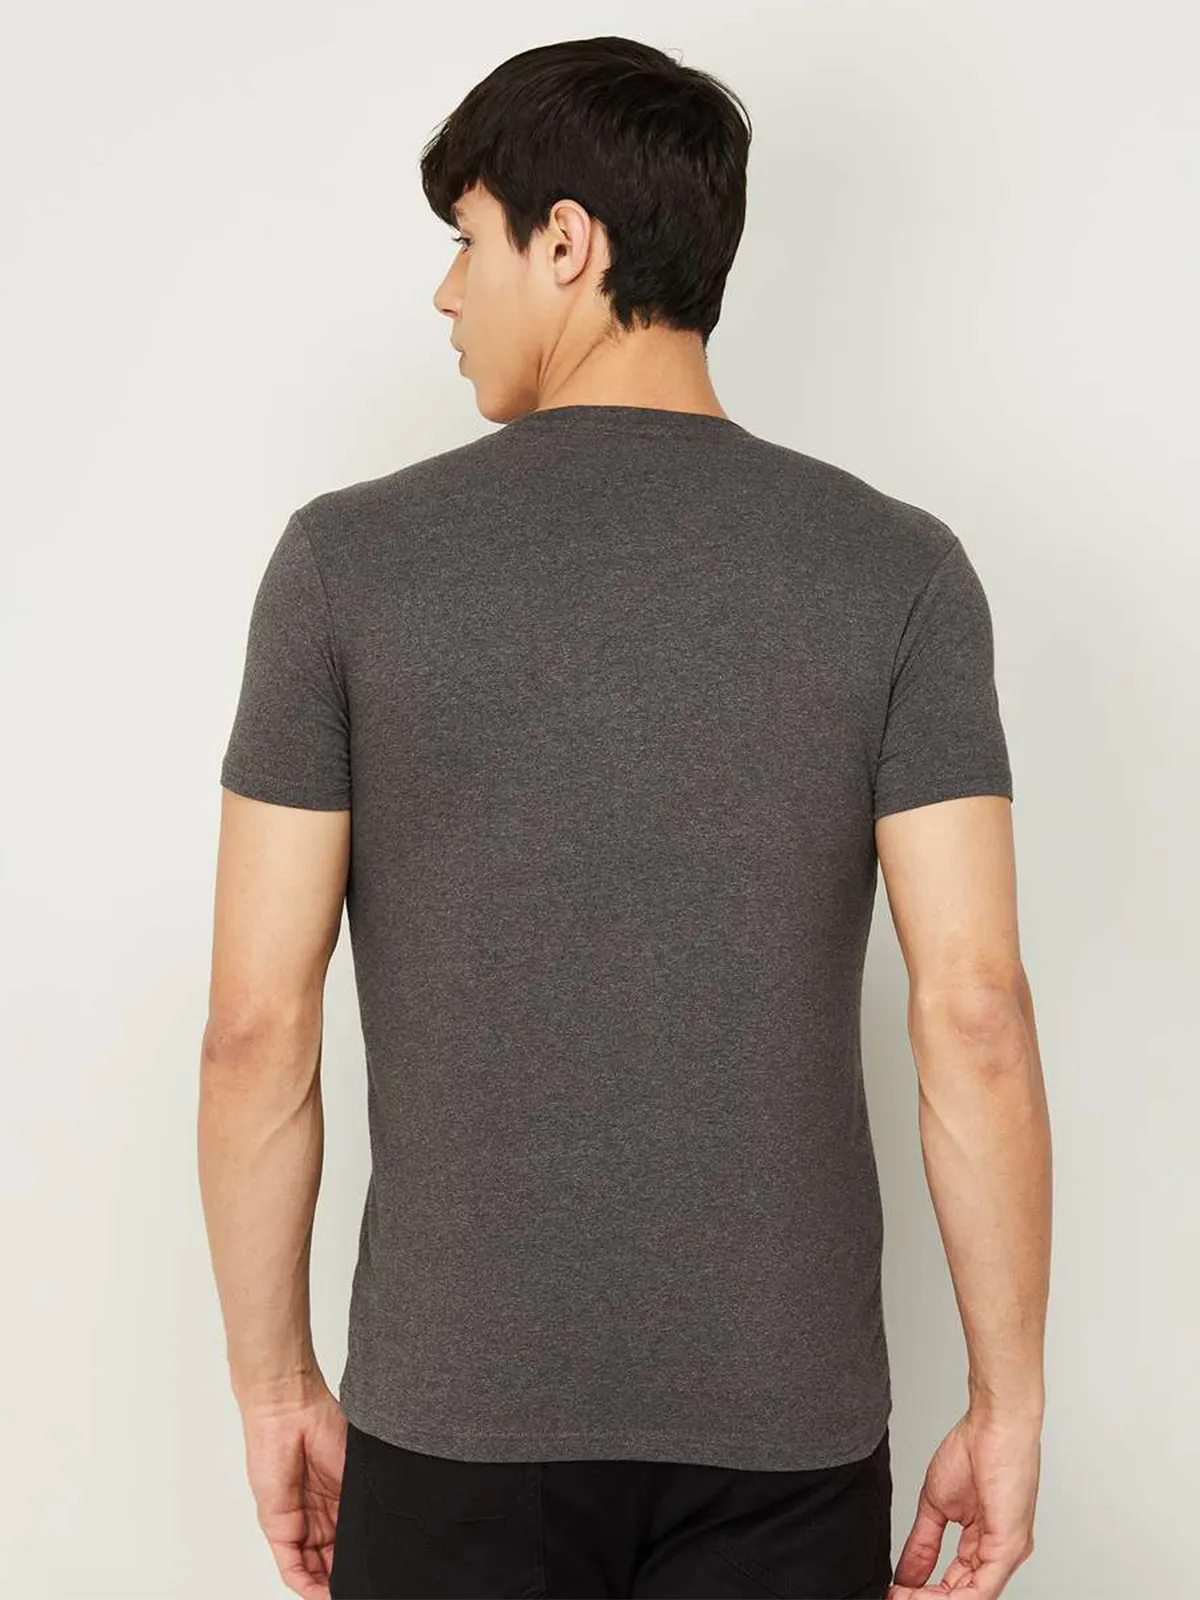 UCB cotton dark grey slim fit t shirt